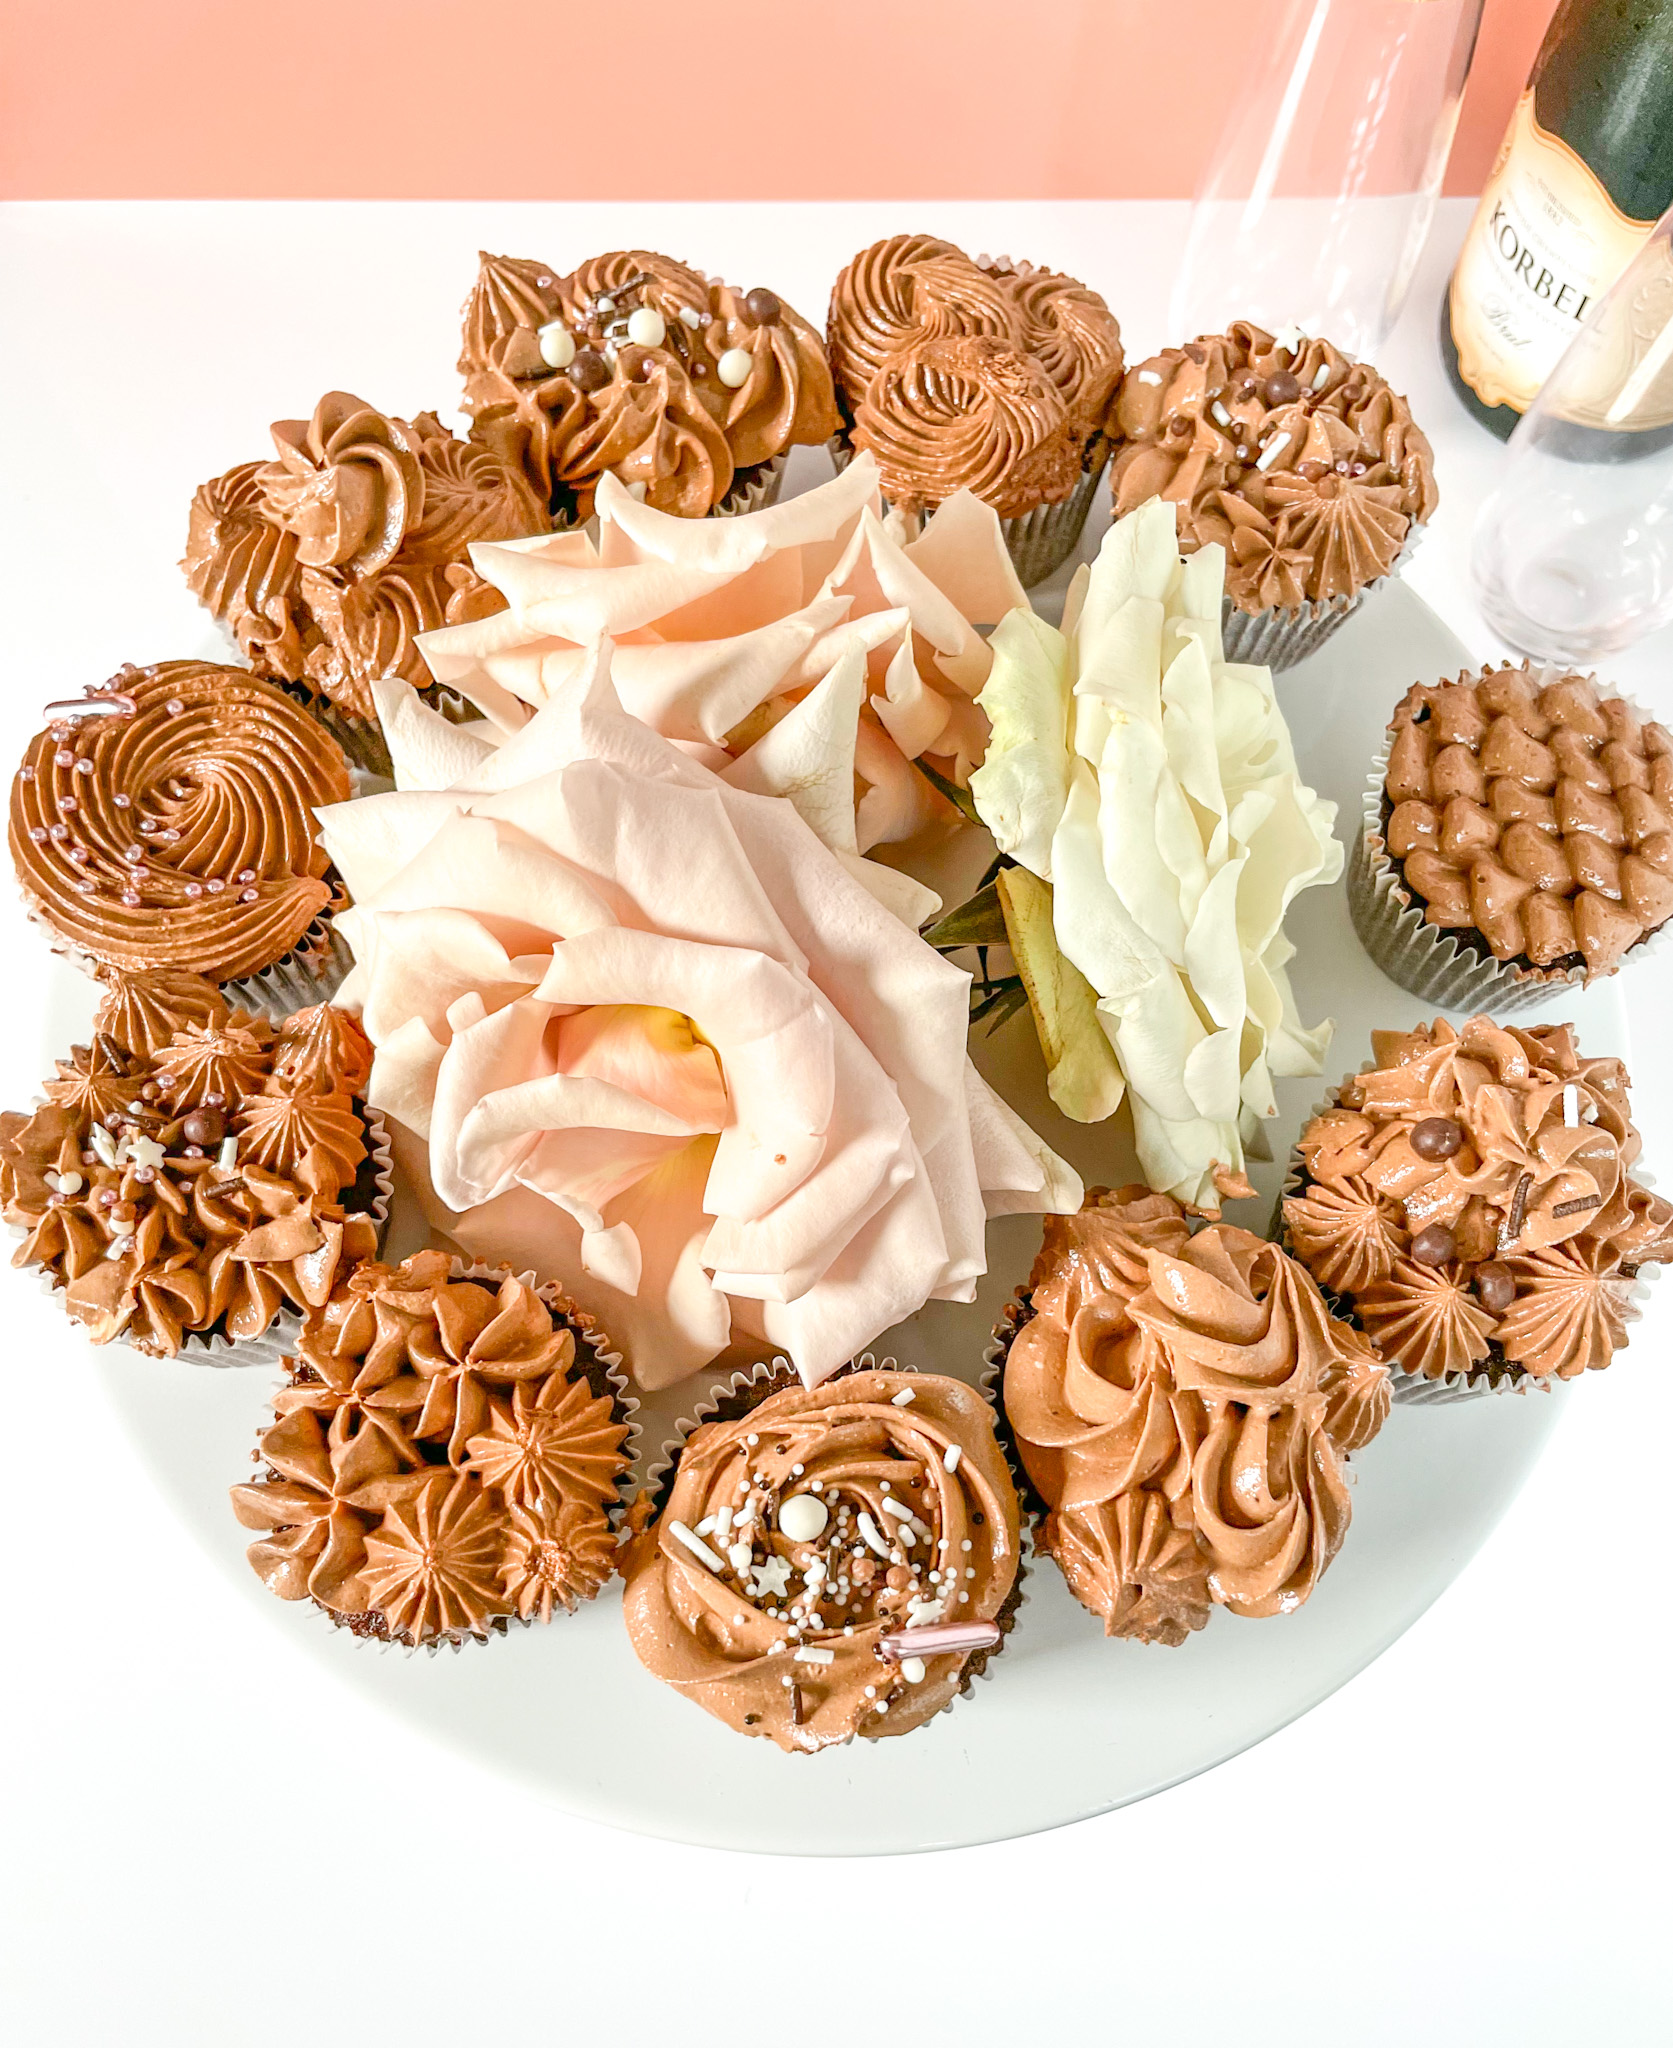 chocolate buttercream cupcakes